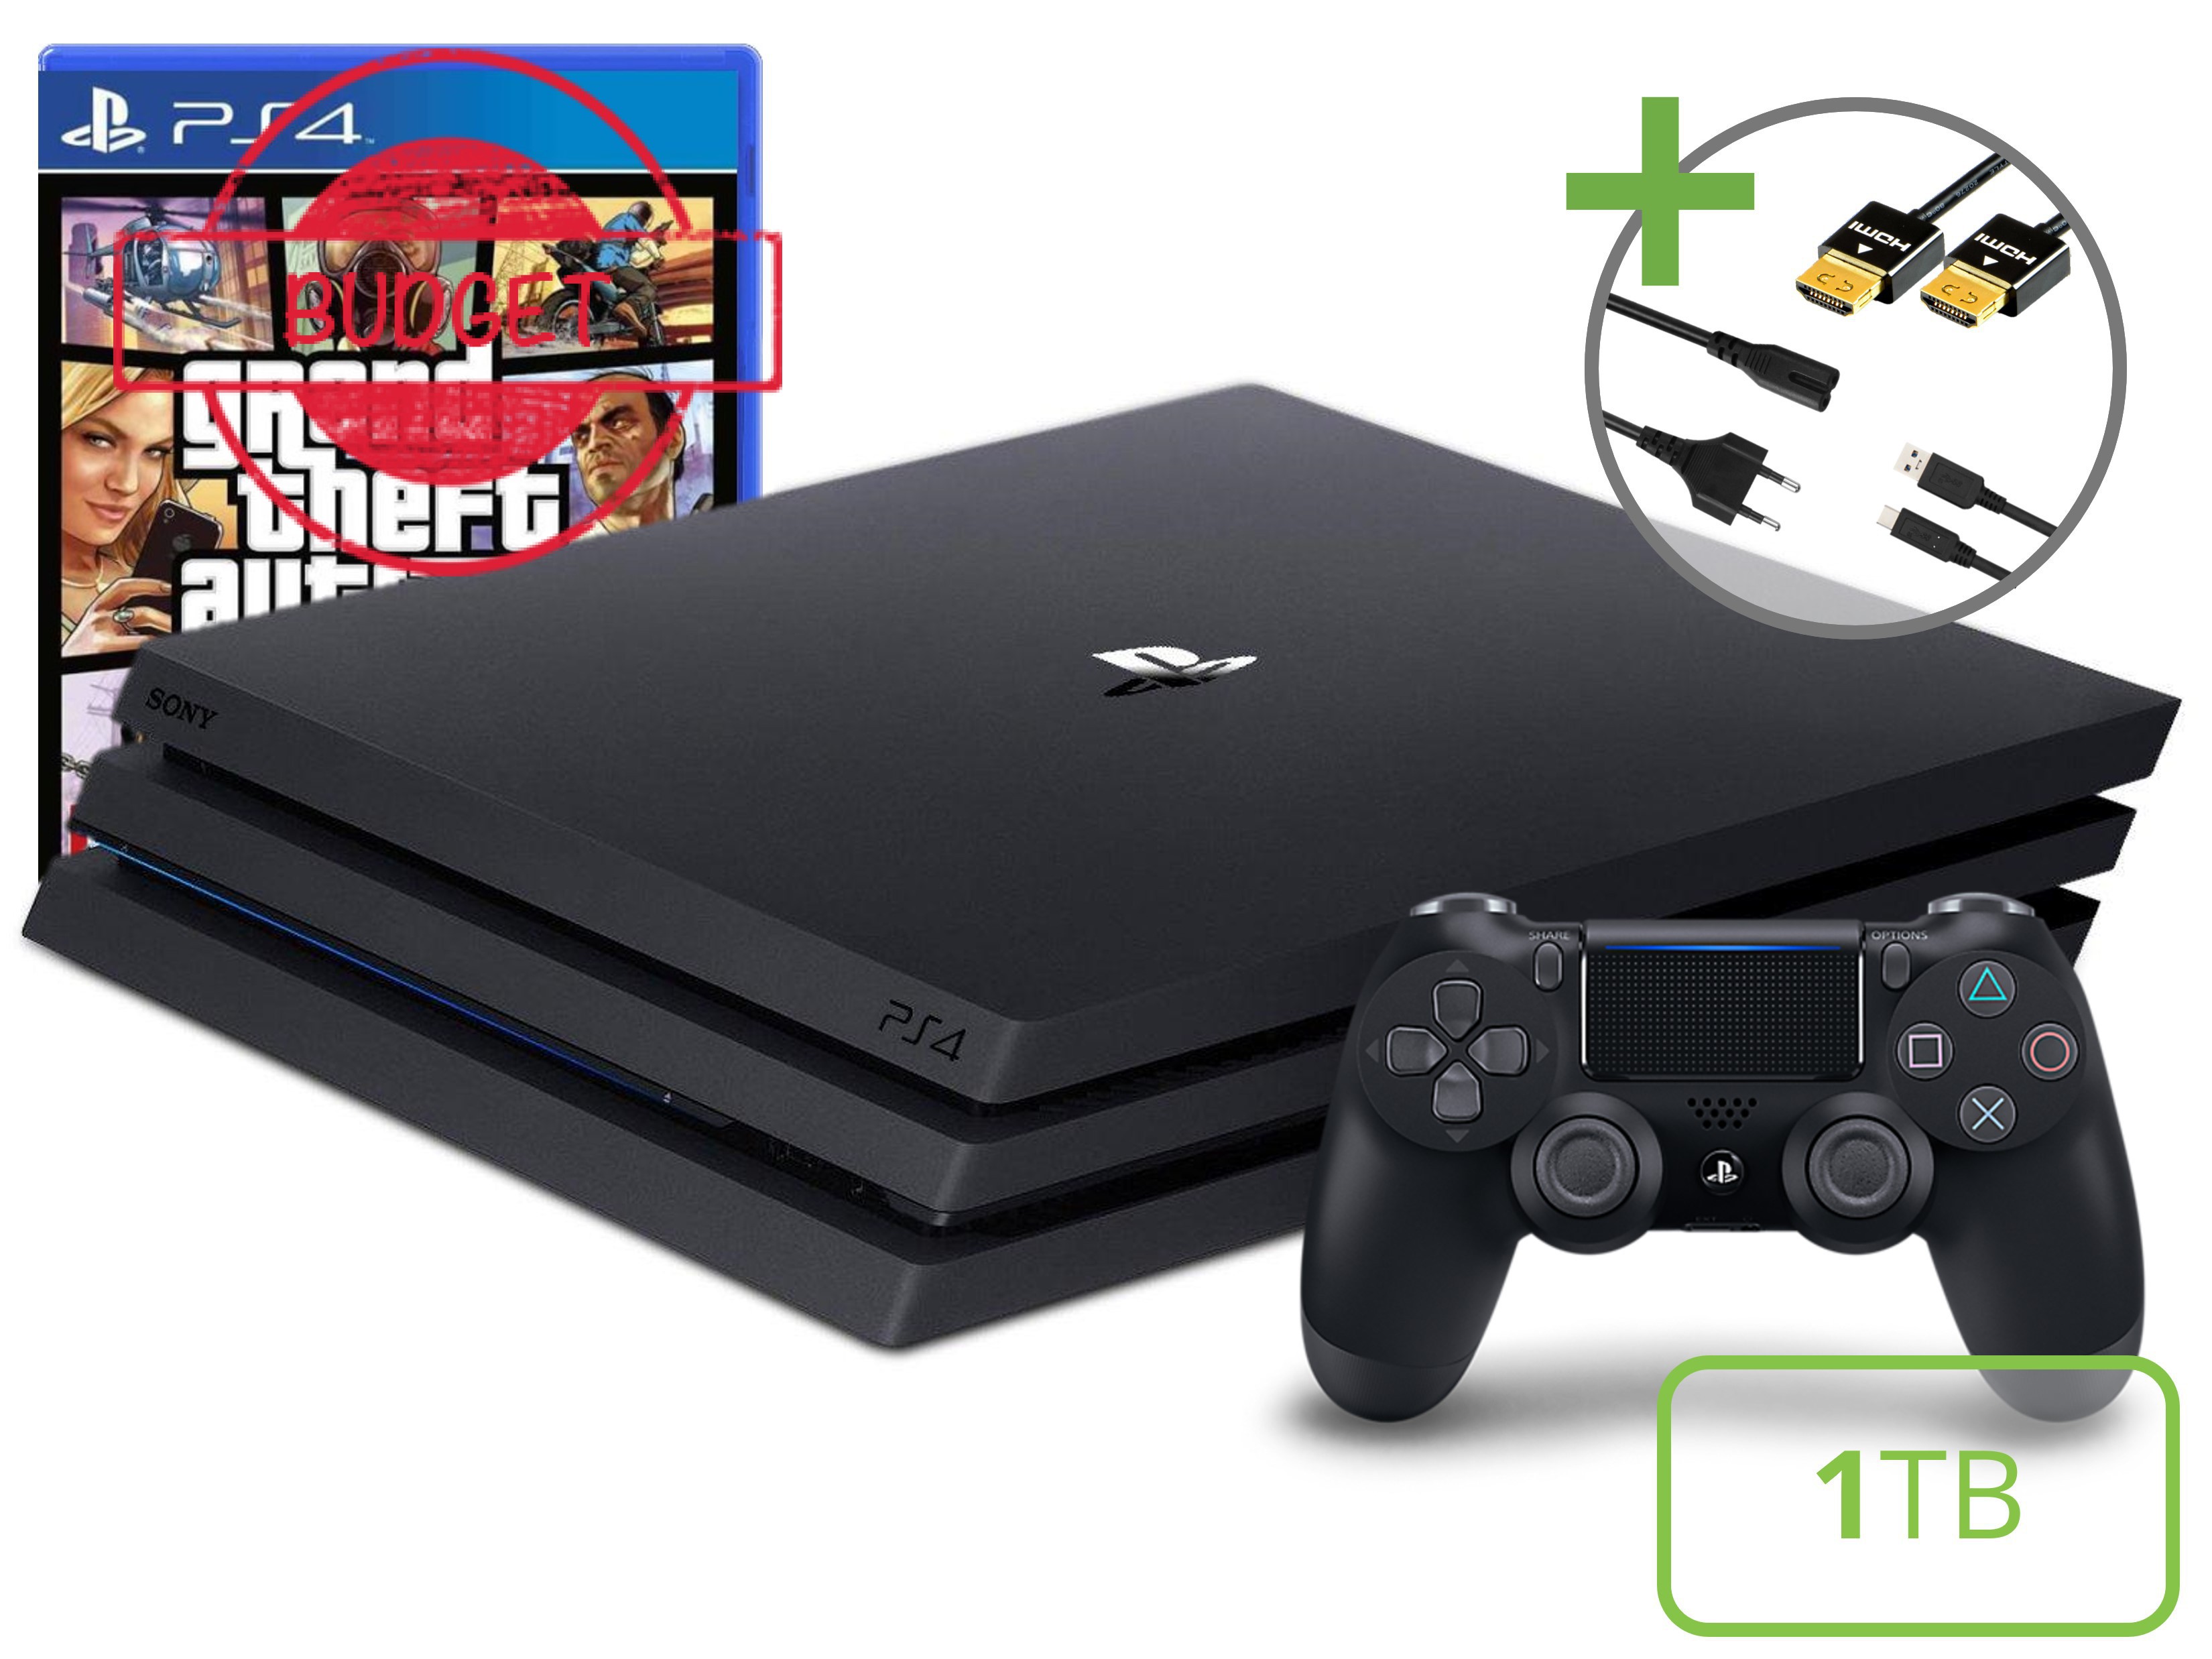 Sony PlayStation 4 Pro Starter Pack - 1TB Grand Theft Auto V Edition - Budget Kopen | Playstation 4 Hardware